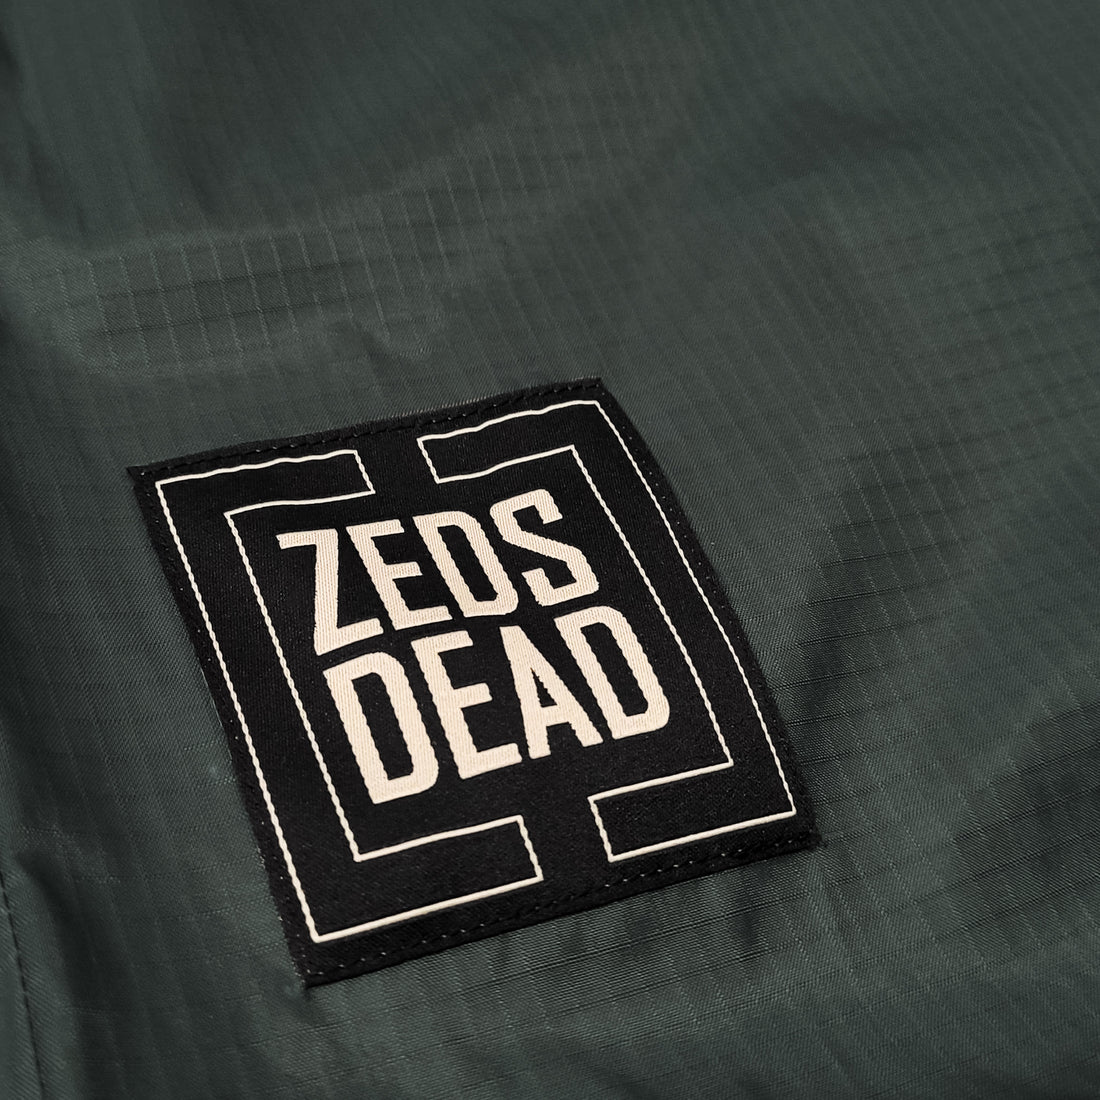 ZEDS DEAD - Deadicated - Ripstop Stowaway Nylon Jersey